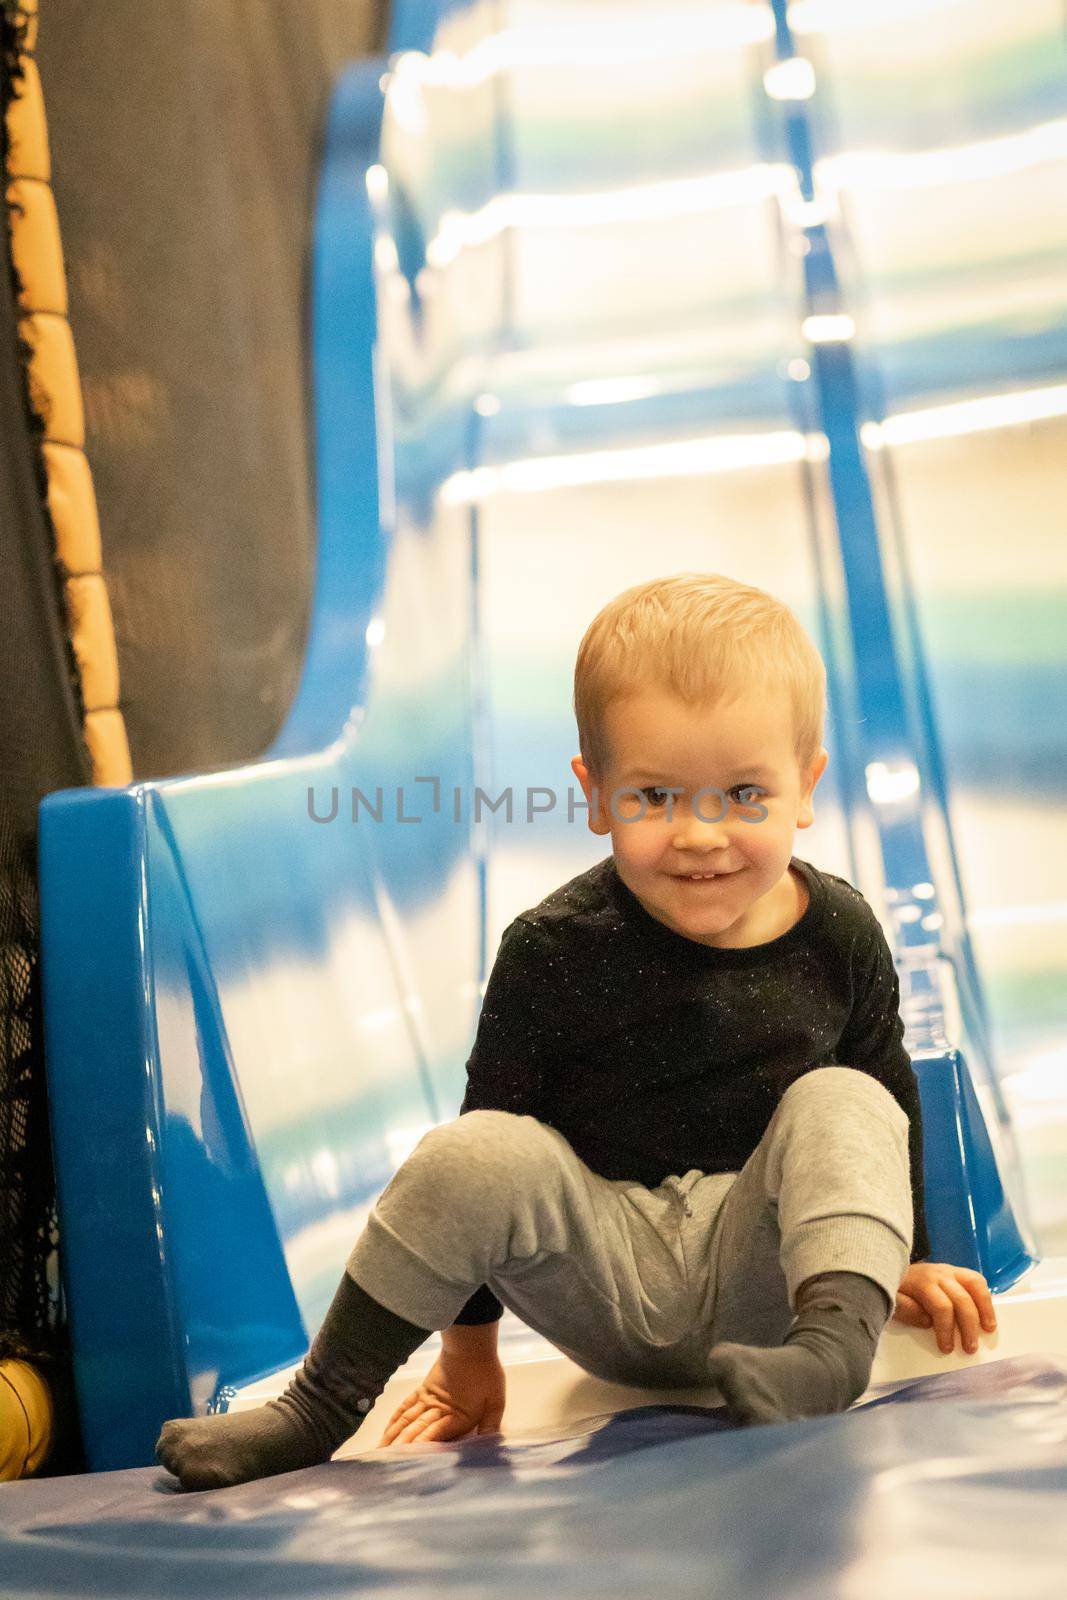 Little toddler boy sliding on shiny metal slide in amusement park at shopping mall